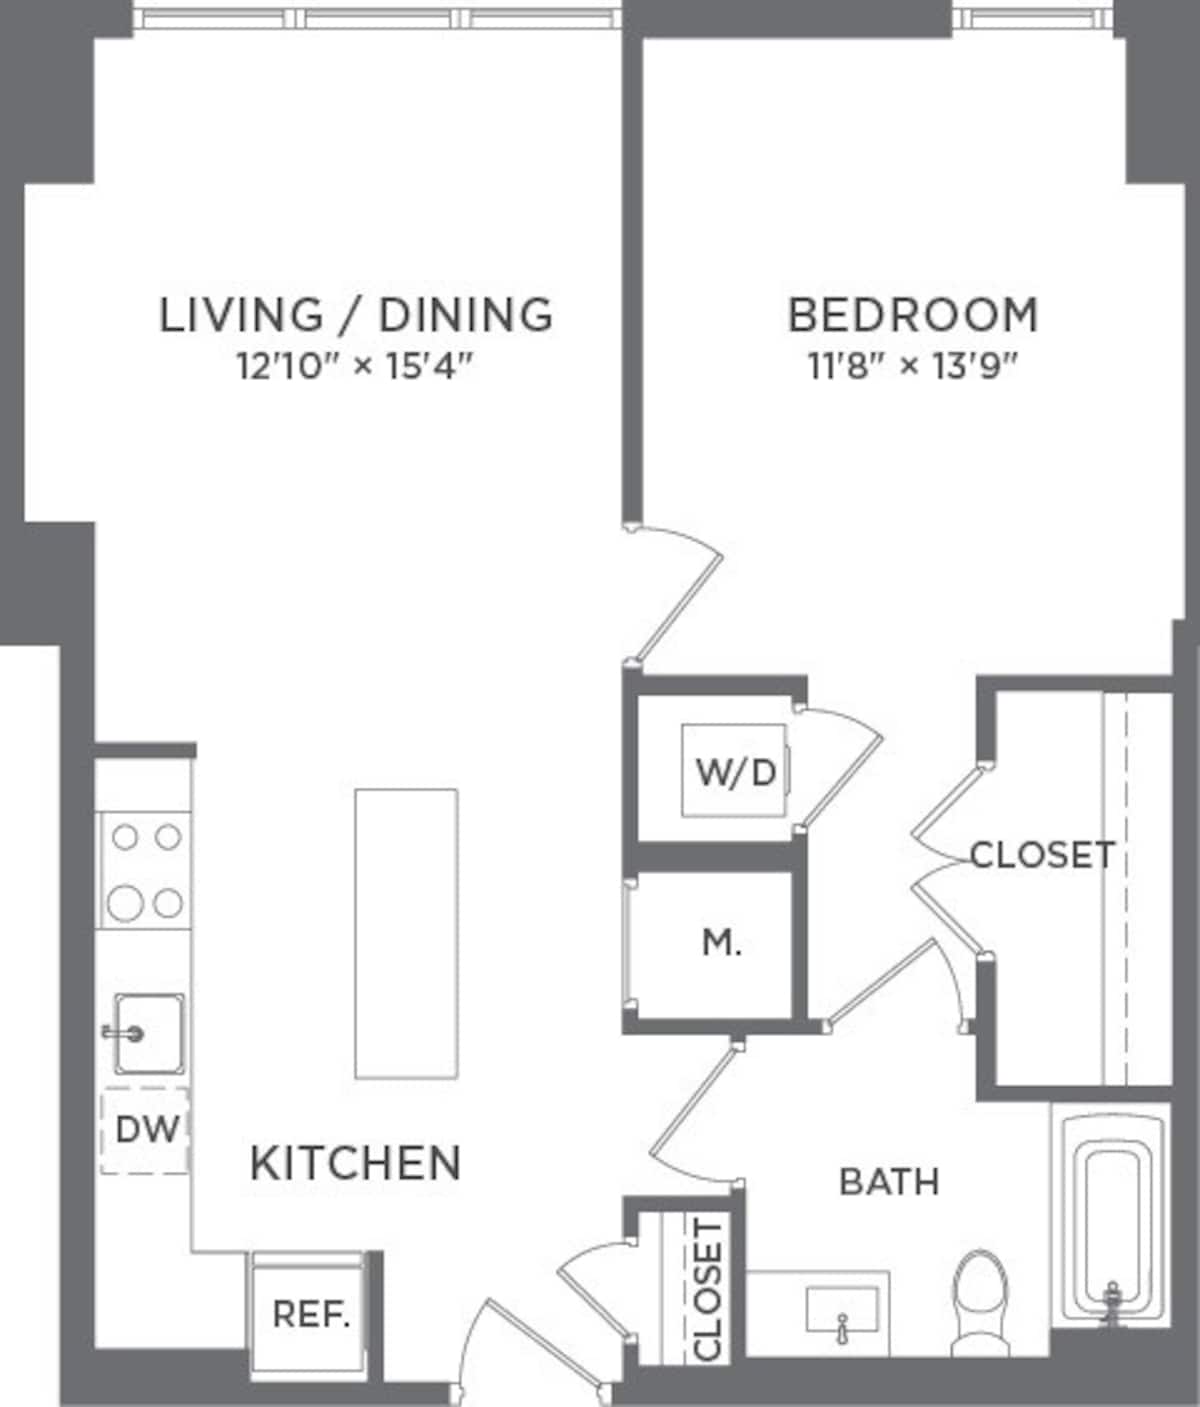 Floorplan diagram for A2C, showing 1 bedroom